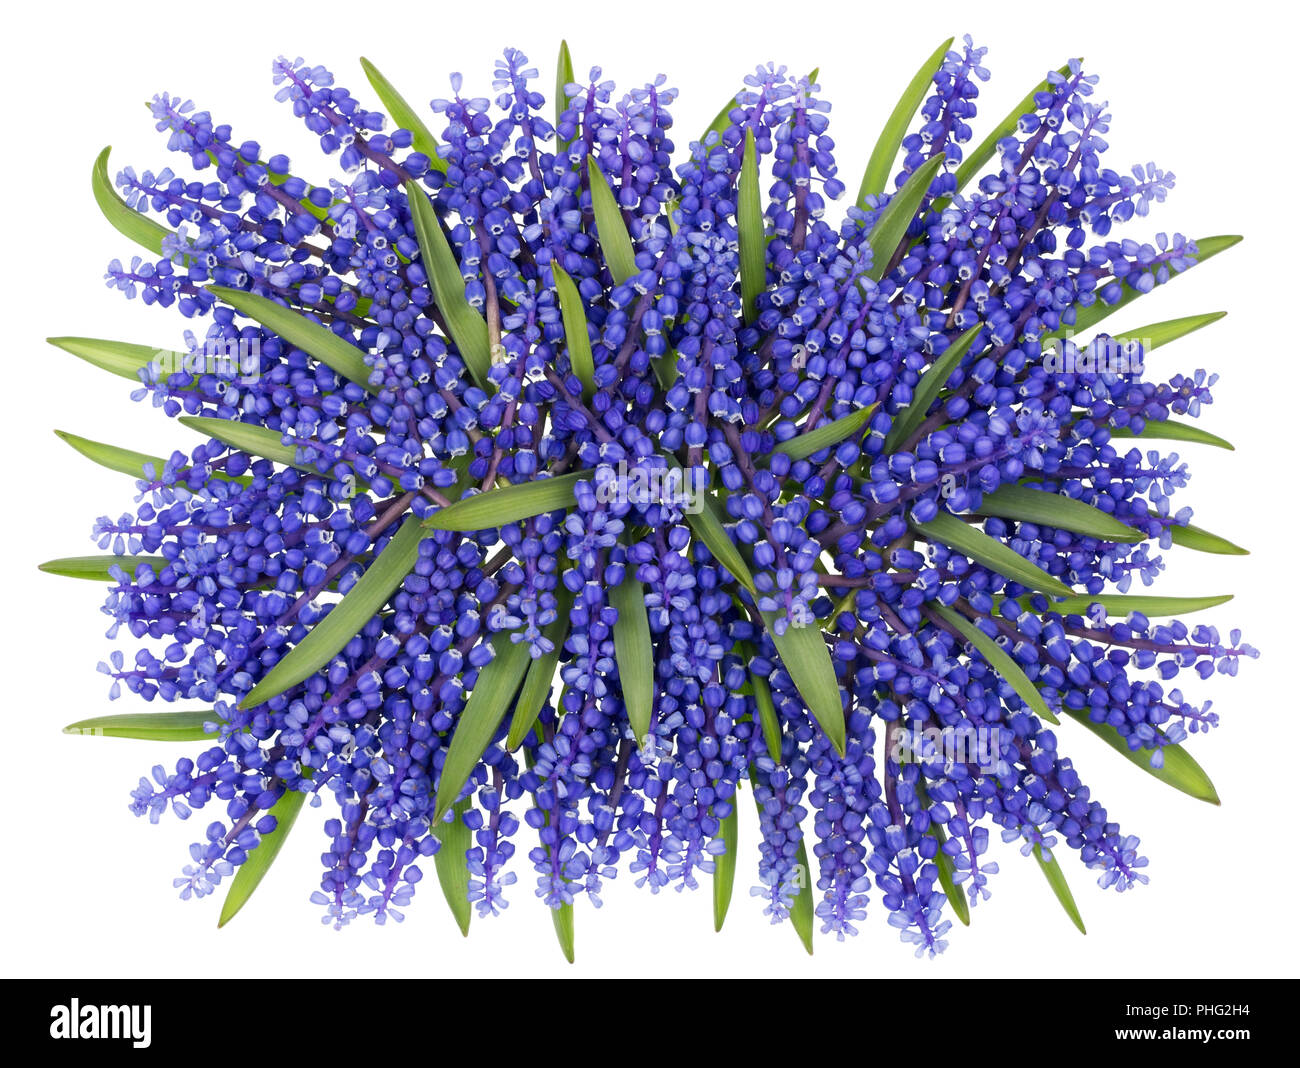 Blue hyacinth bush concept Stock Photo